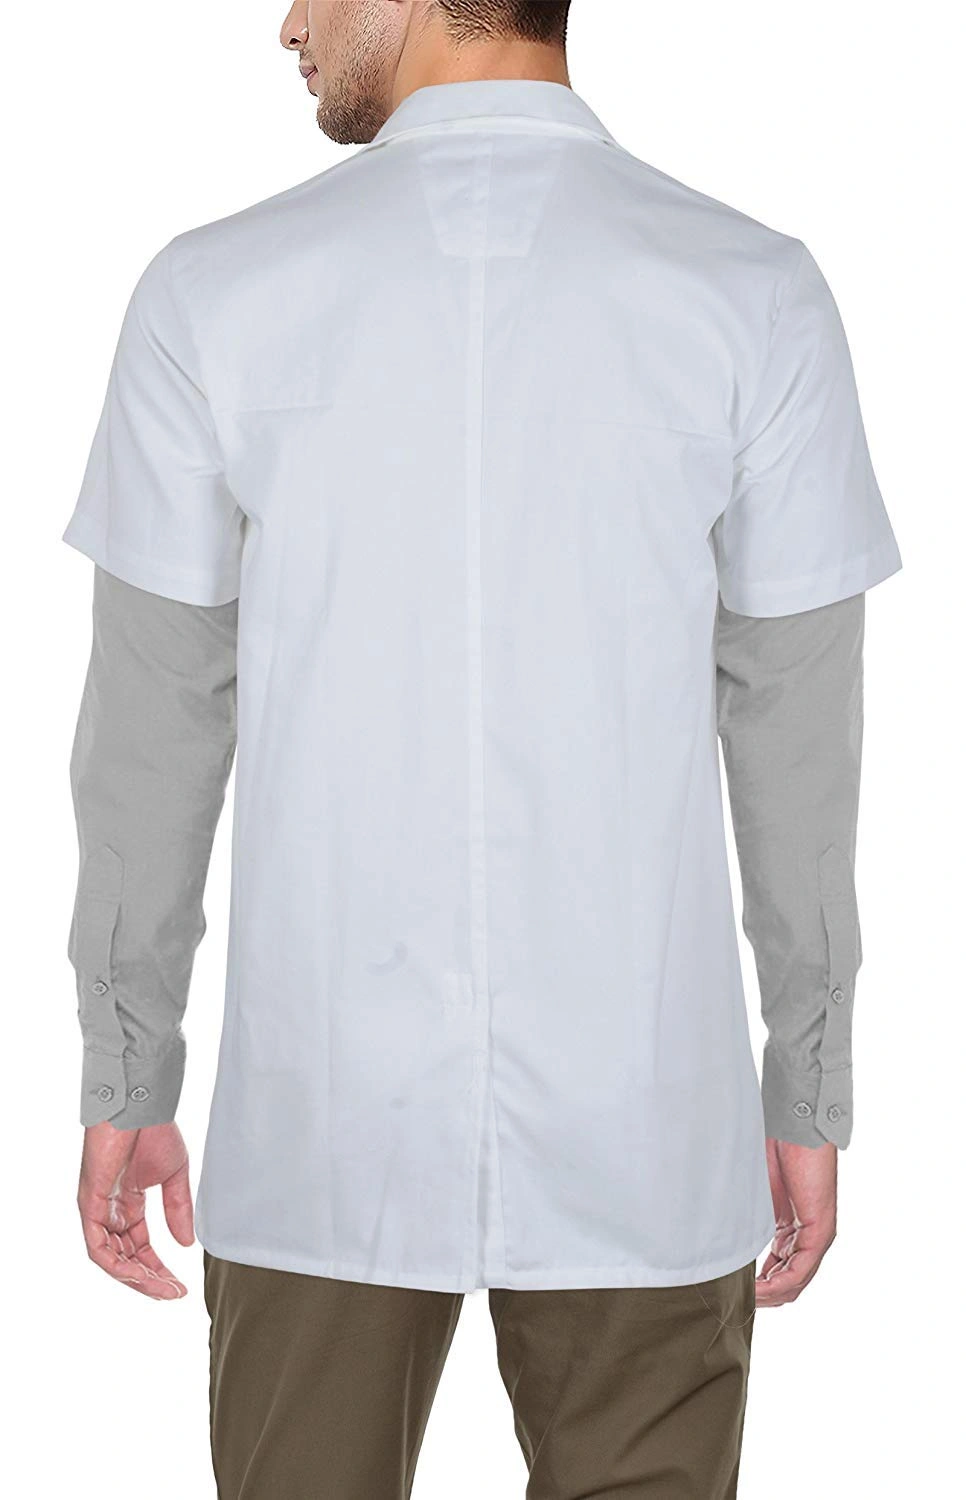 Buy Ara Uniforms Men Lab Coat Sleeveless Apron Comfortable Medical Coat at  Best Price Online.